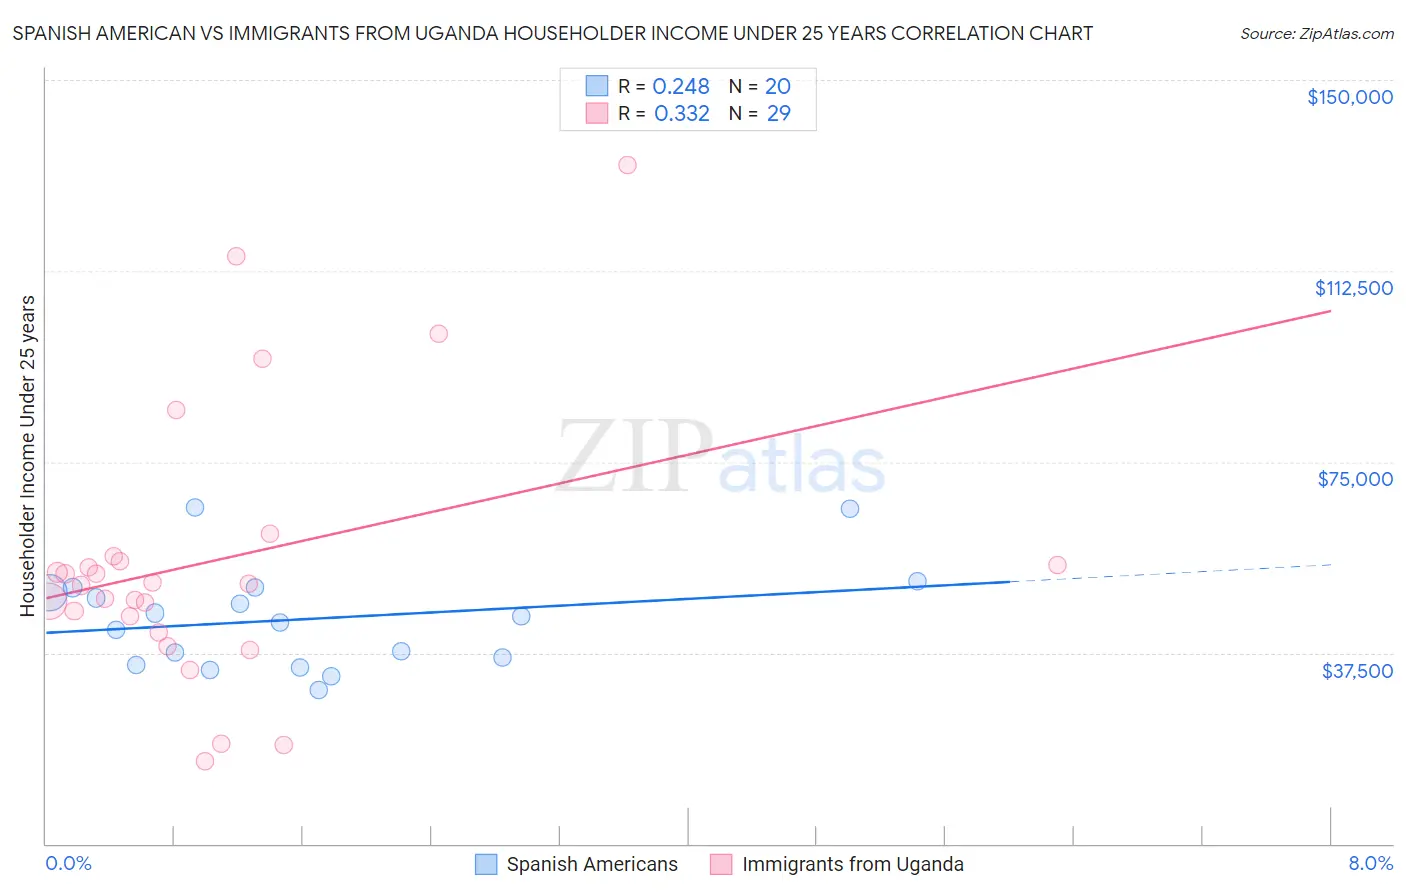 Spanish American vs Immigrants from Uganda Householder Income Under 25 years